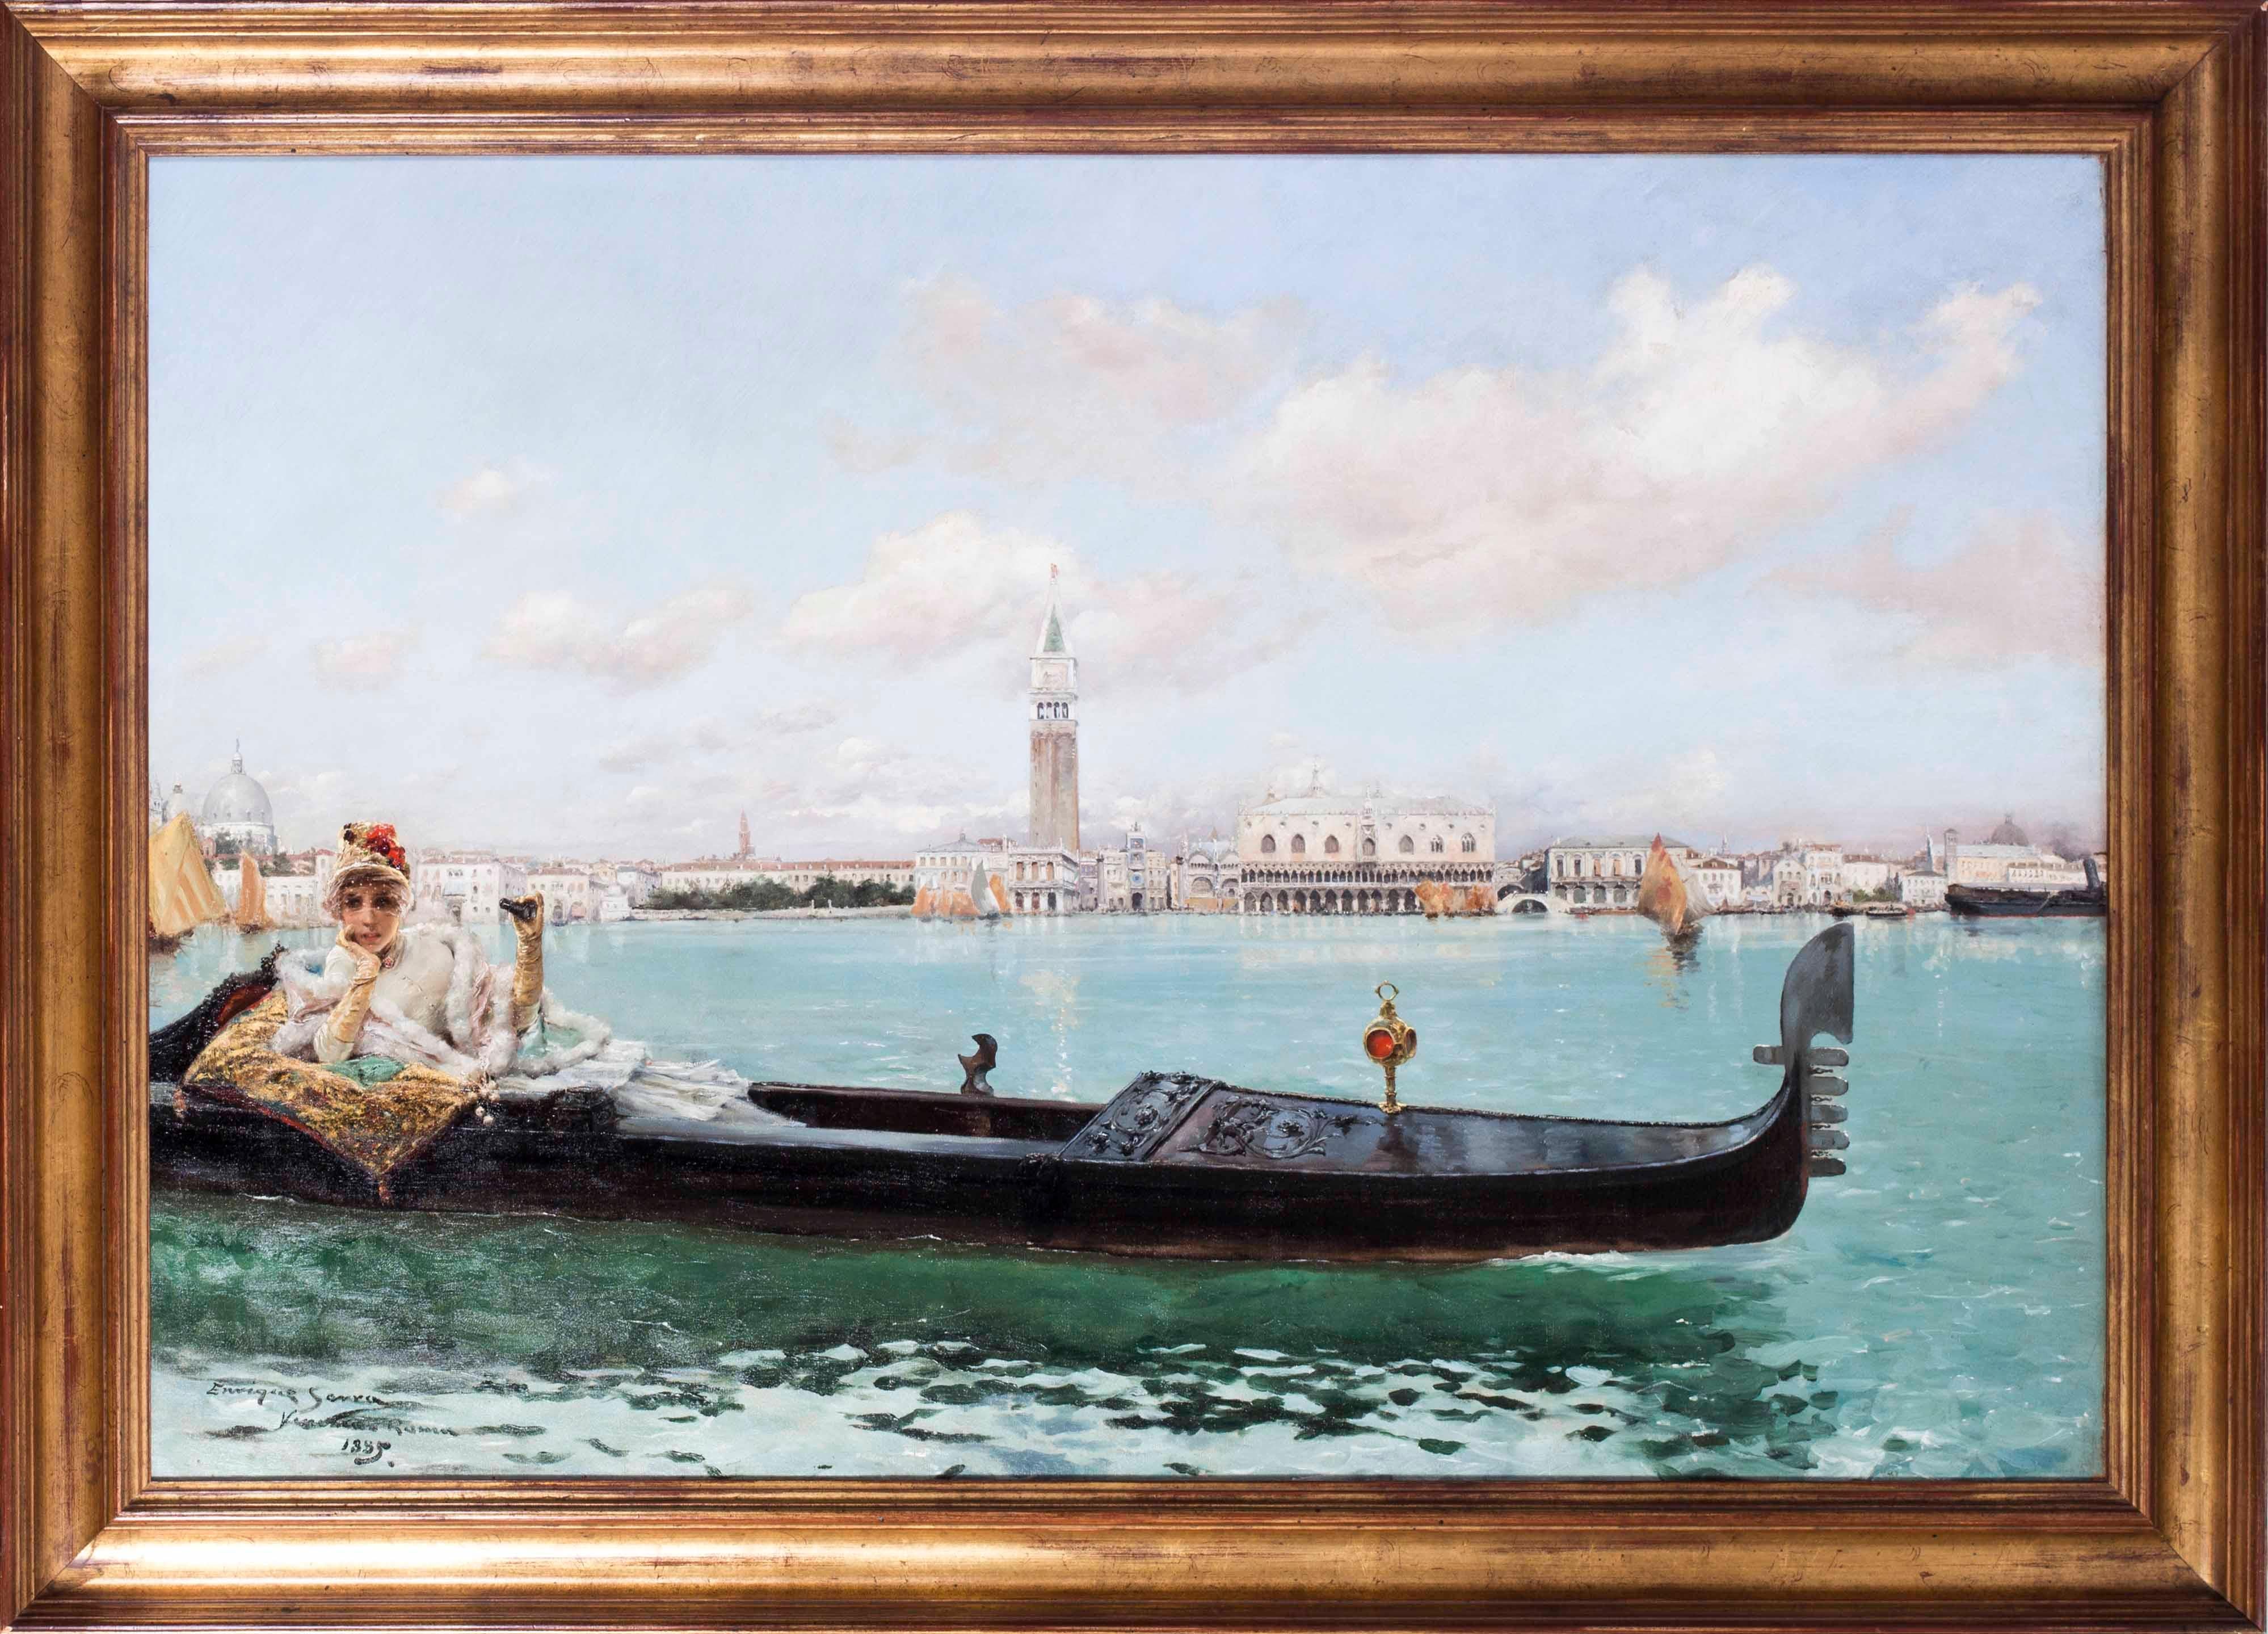 Enrique Serra y Auque Landscape Painting - Large 19th C oil painting of a lady on the Venetian Lagoon by Serra y Auque